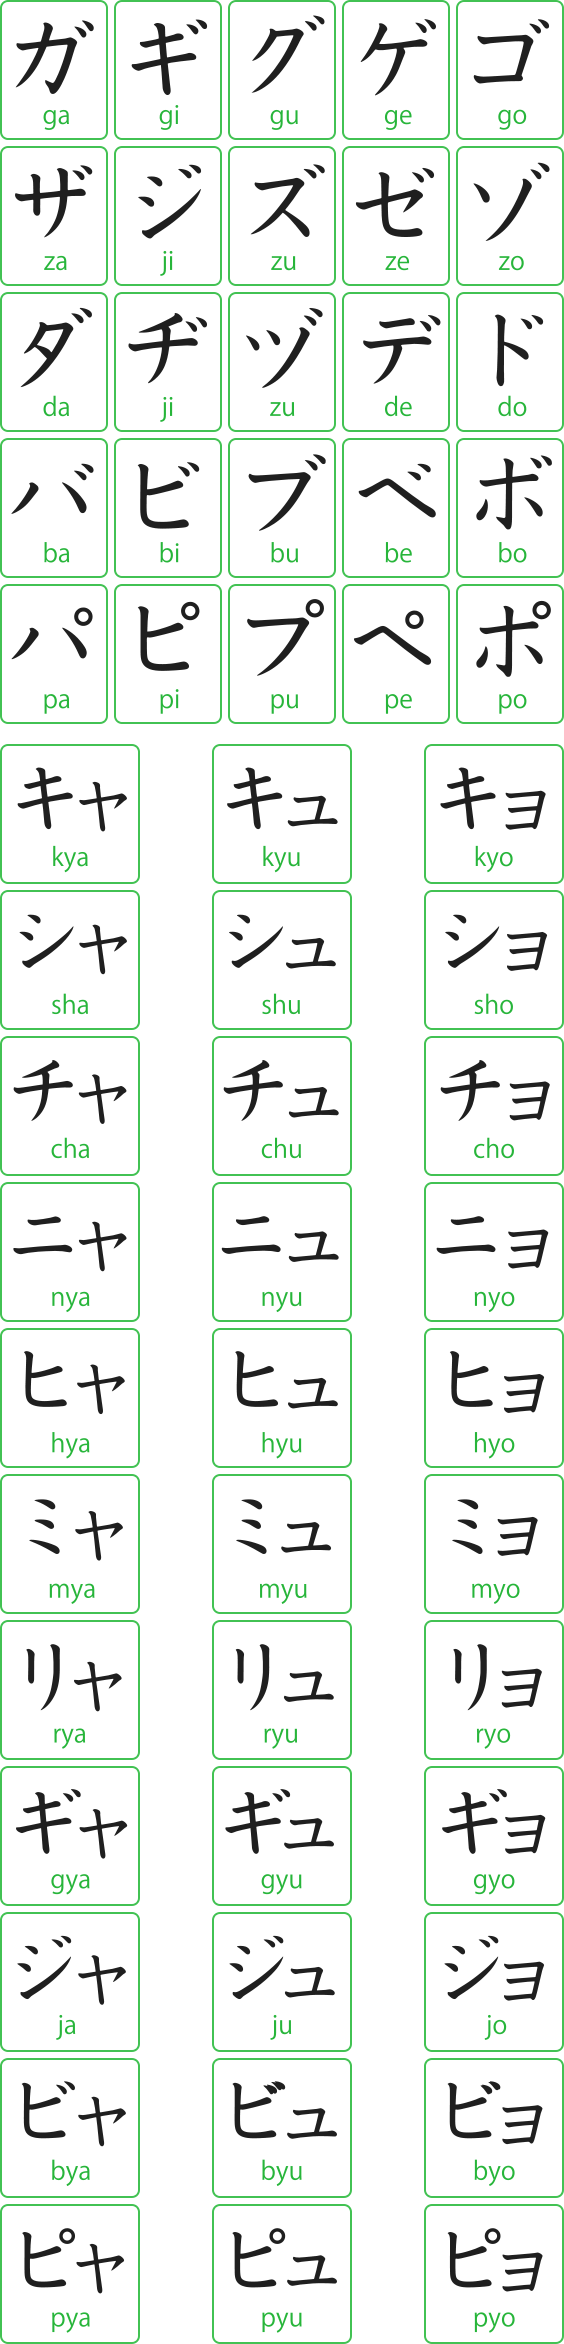 Katakana halaman 2